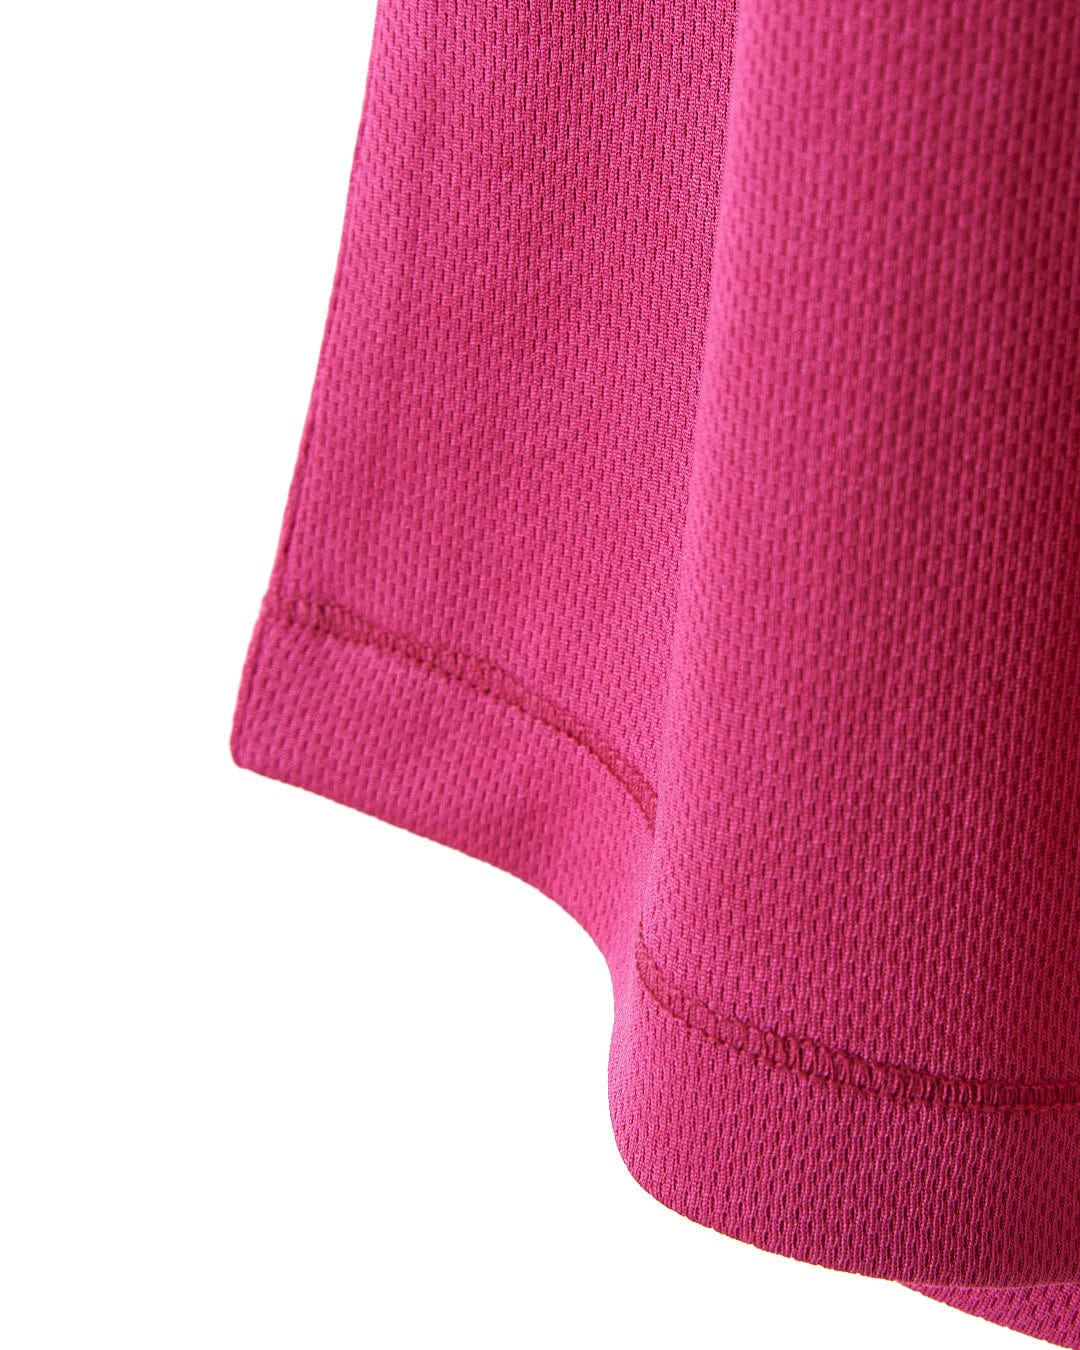 A close up of a Saltrock Hardskate - Kids Vest - Dark Pink.